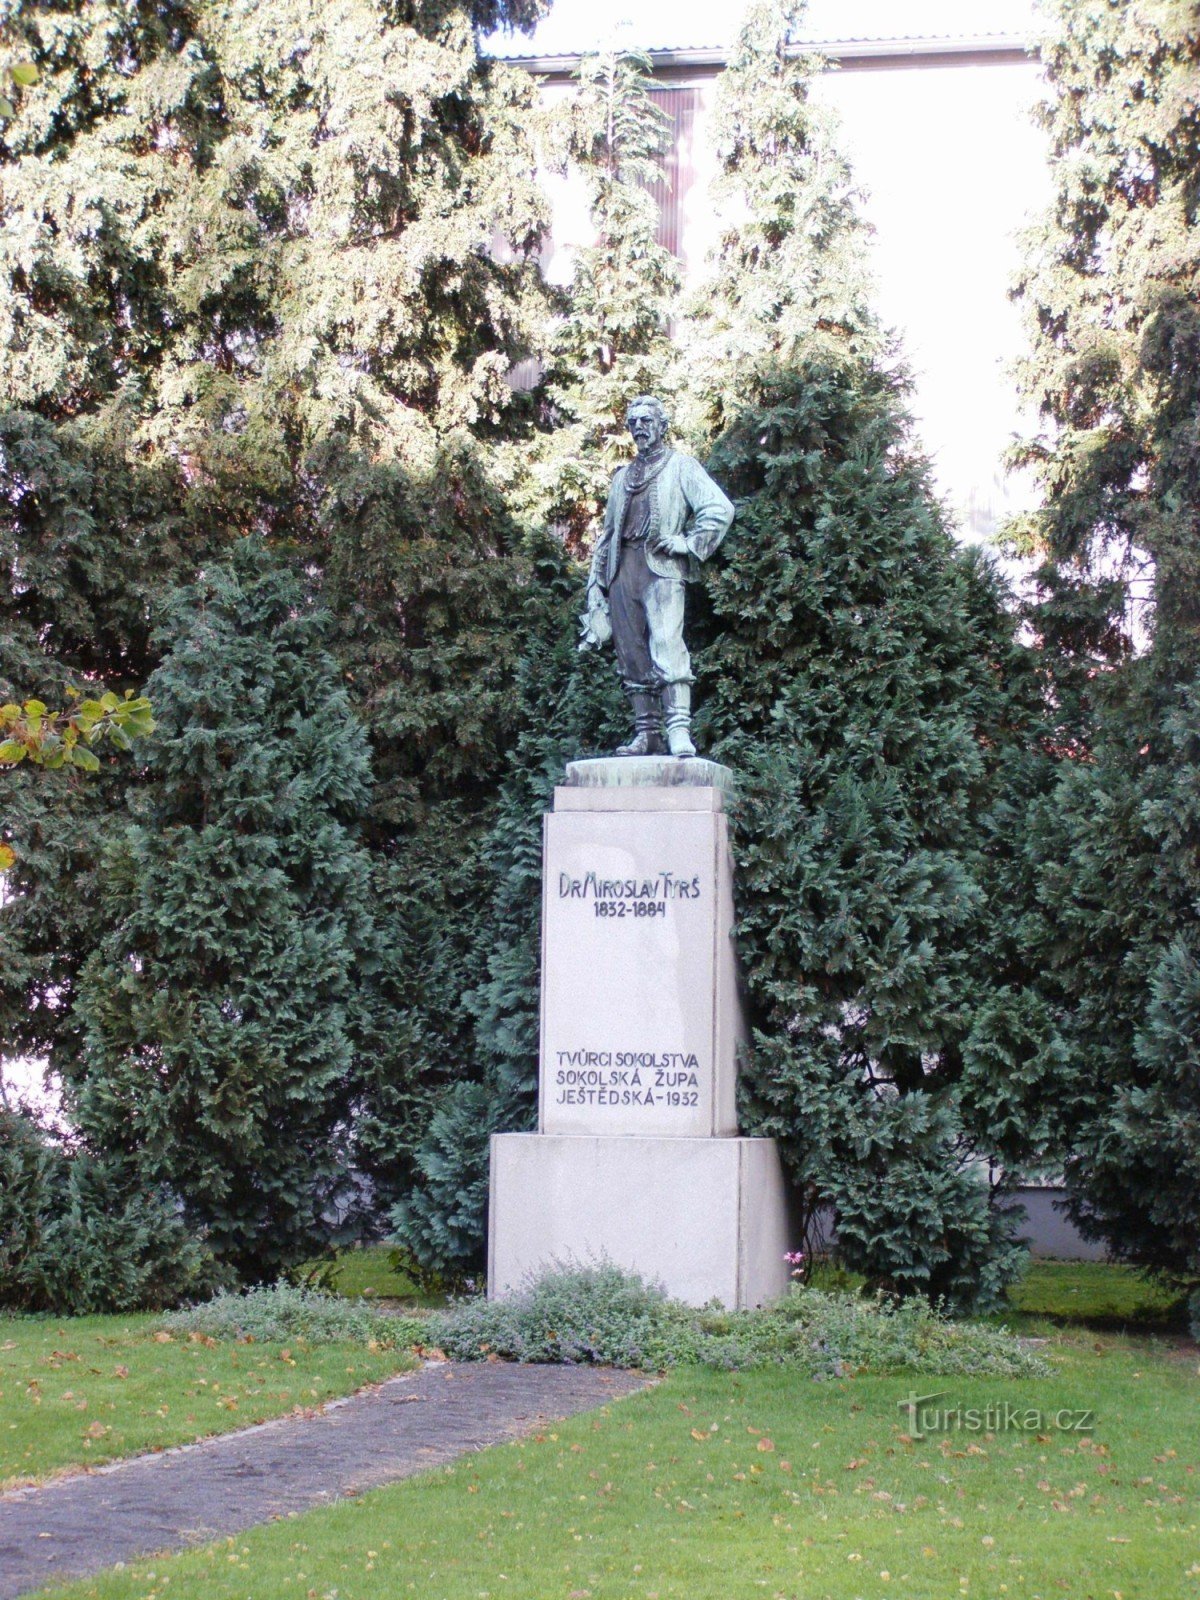 Turnov - monument to Dr. Miroslav Tyrš